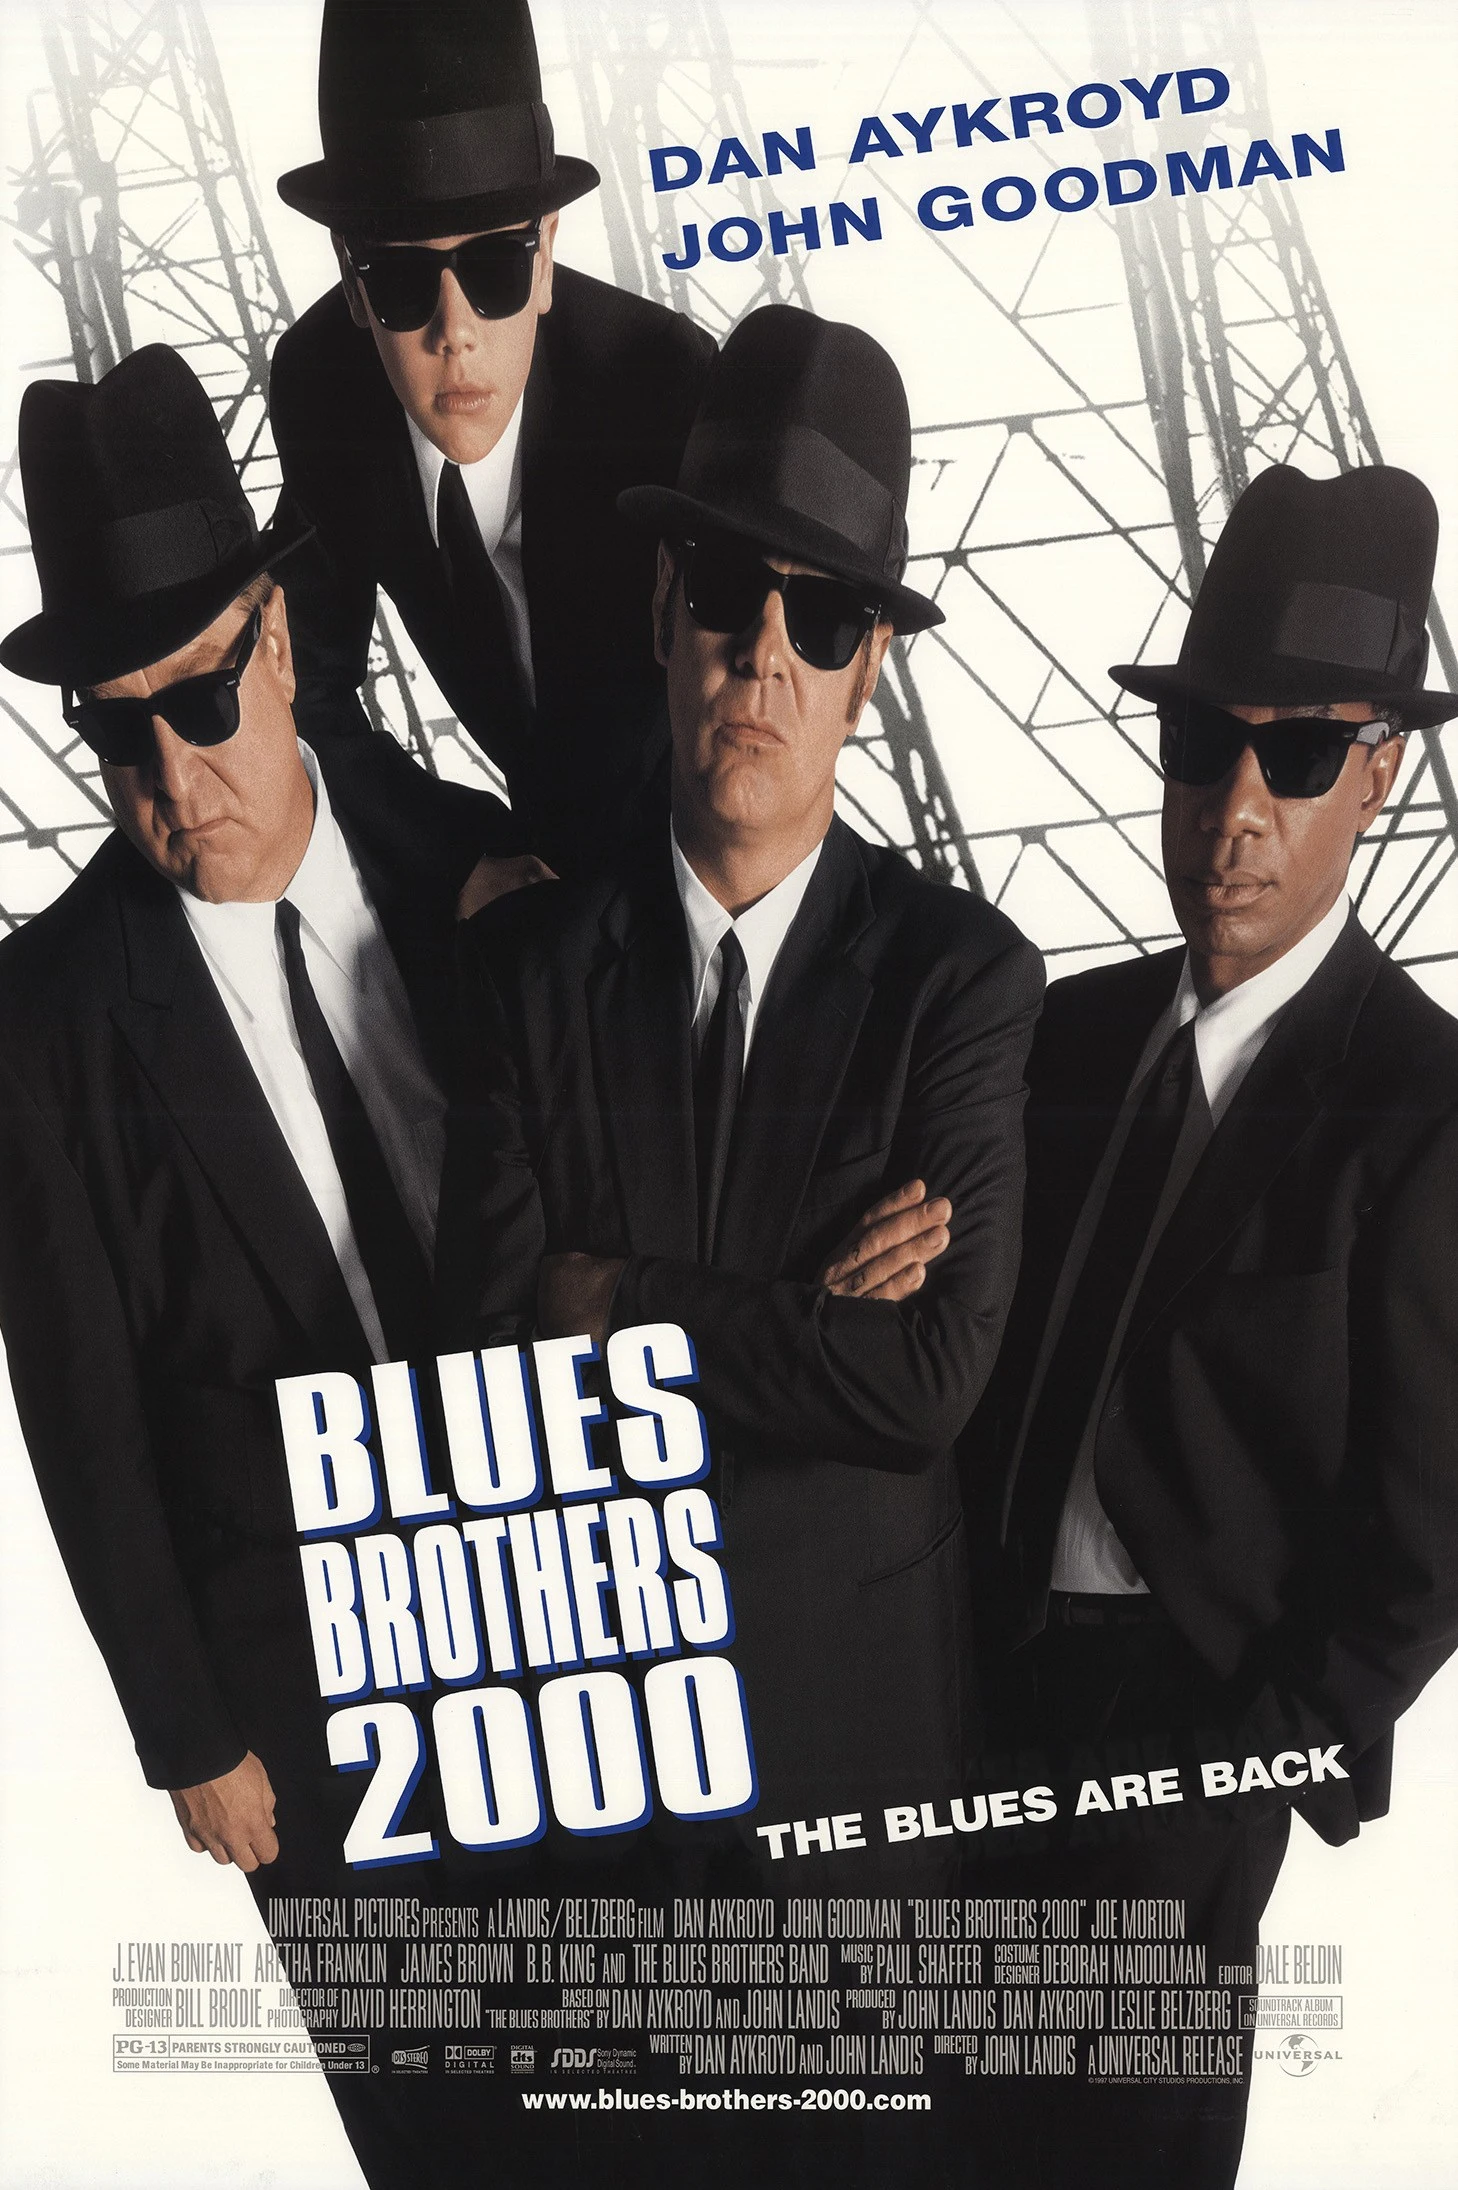 El ritmo continúa (Blues Brothers 2000)